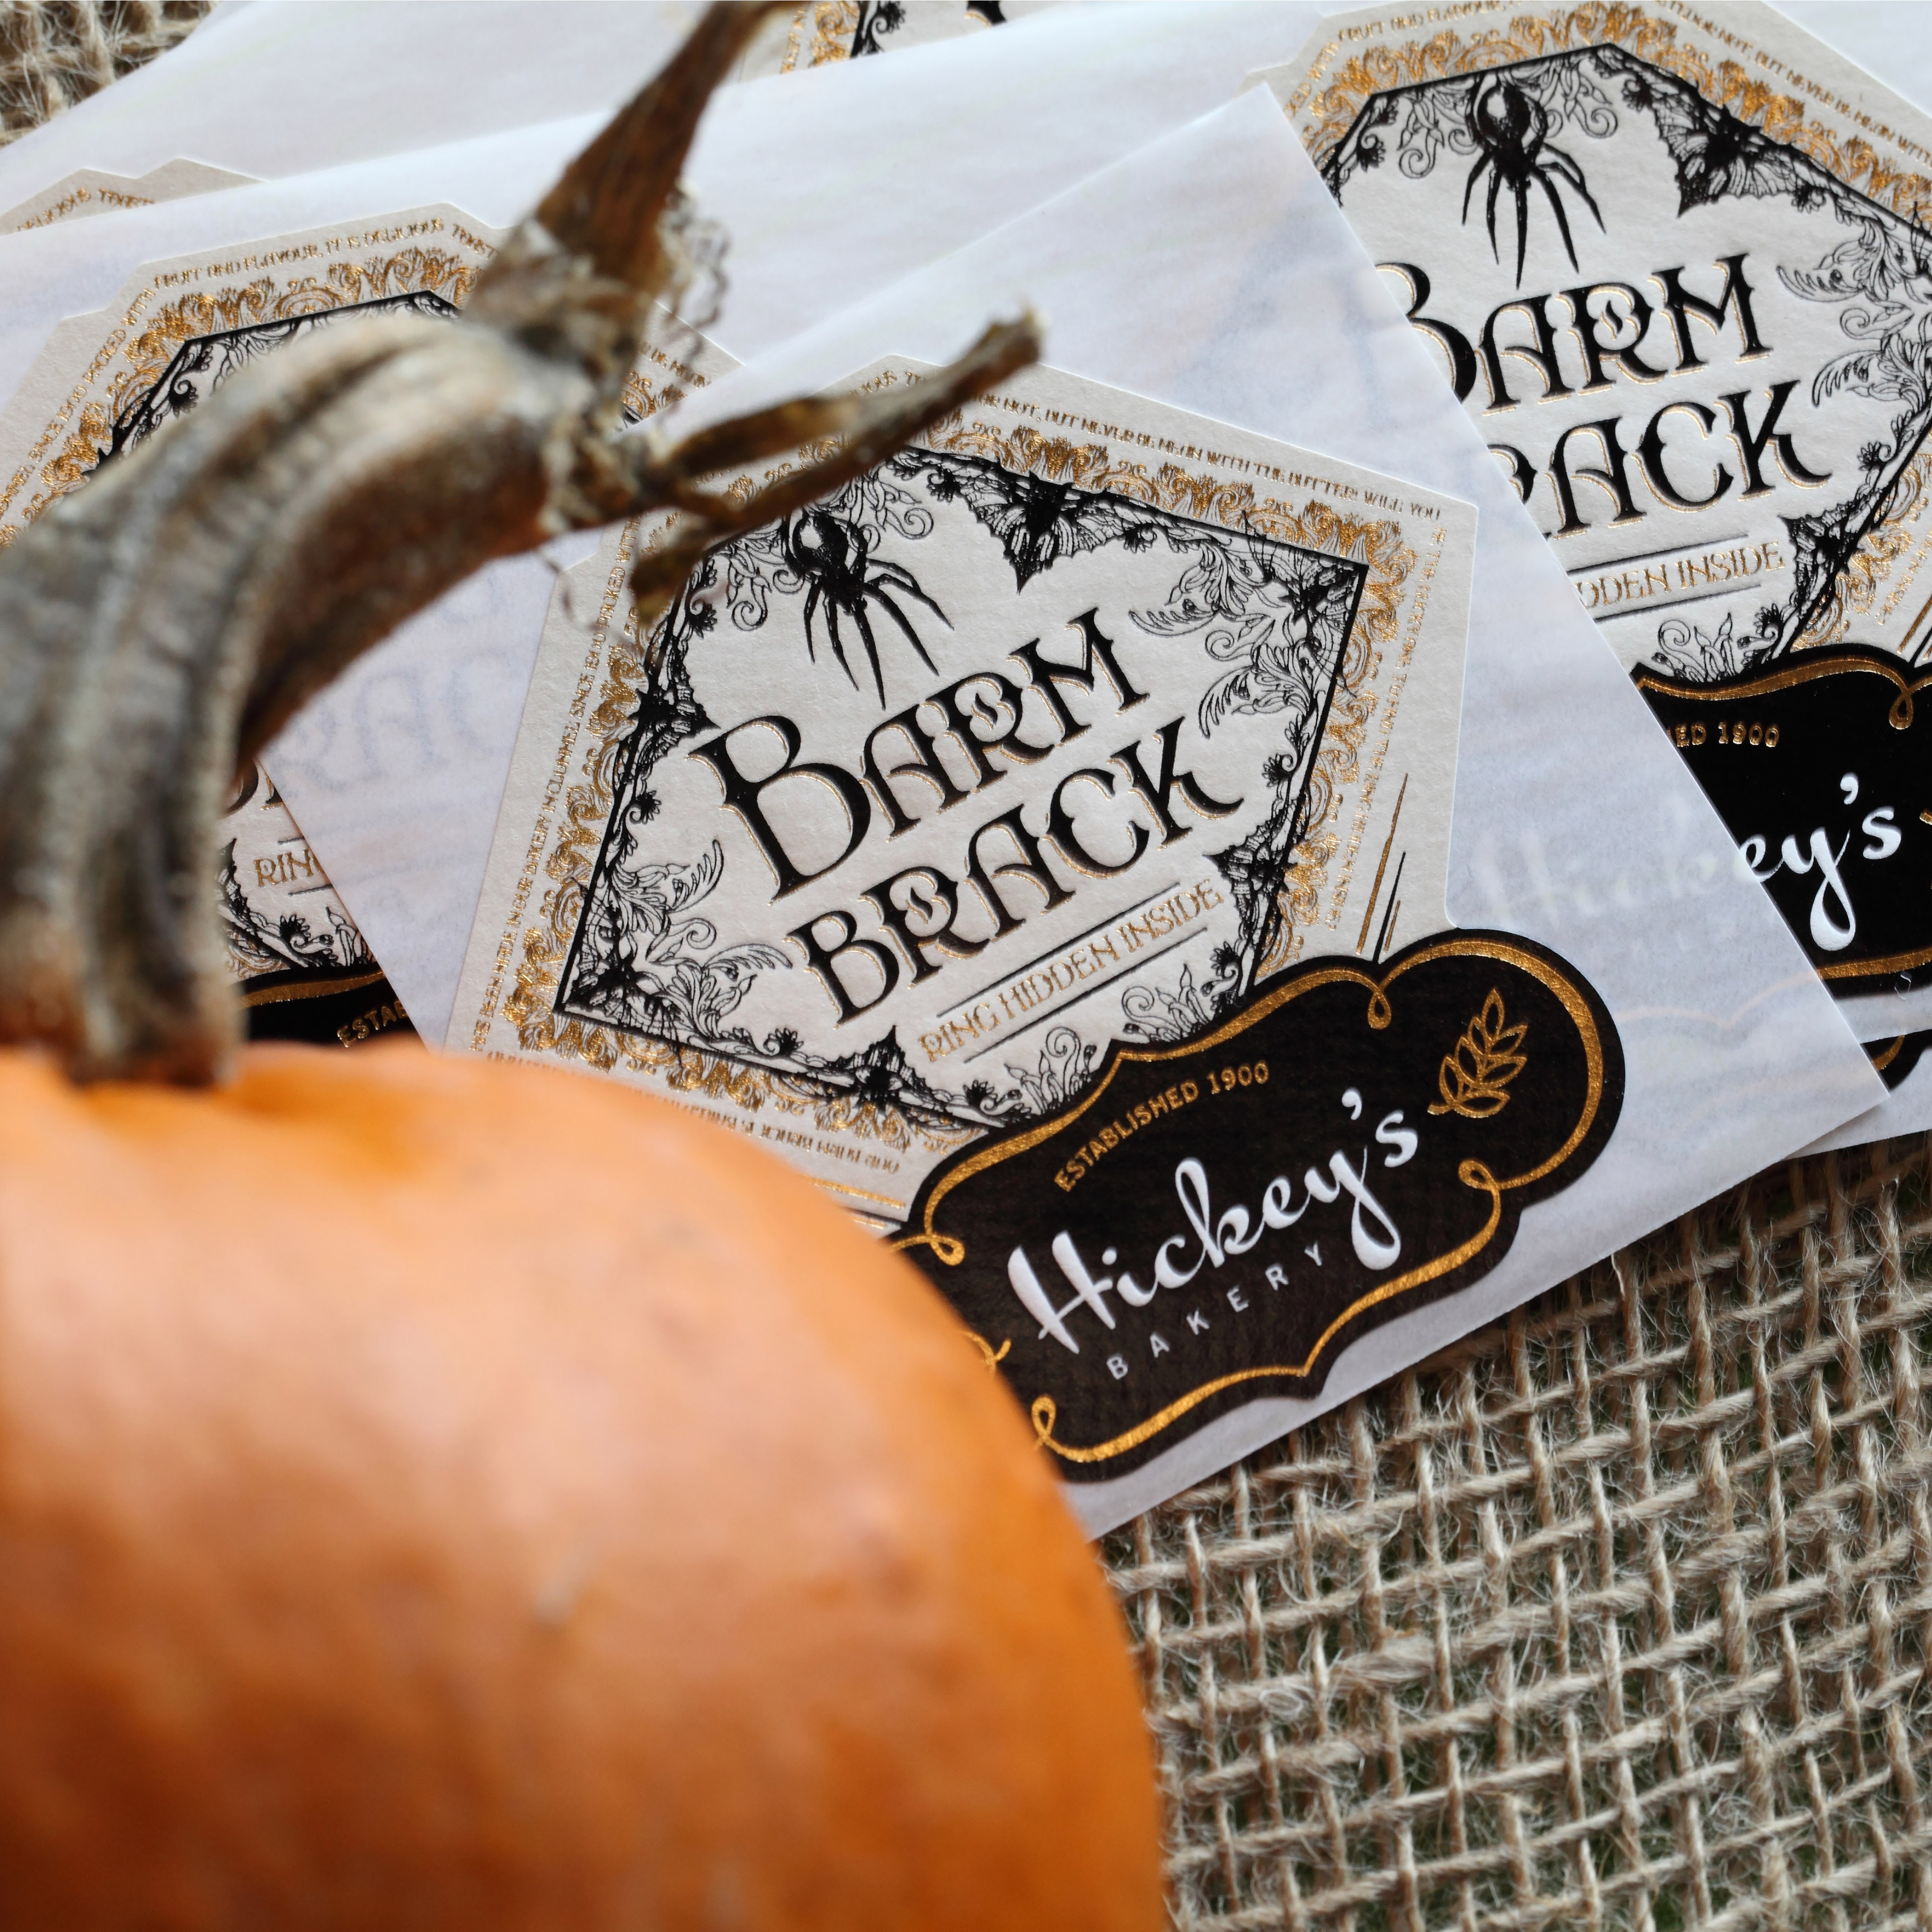 Irish Graphic Design Agency Designed Hickey’s Barm Brack Halloween Packaging